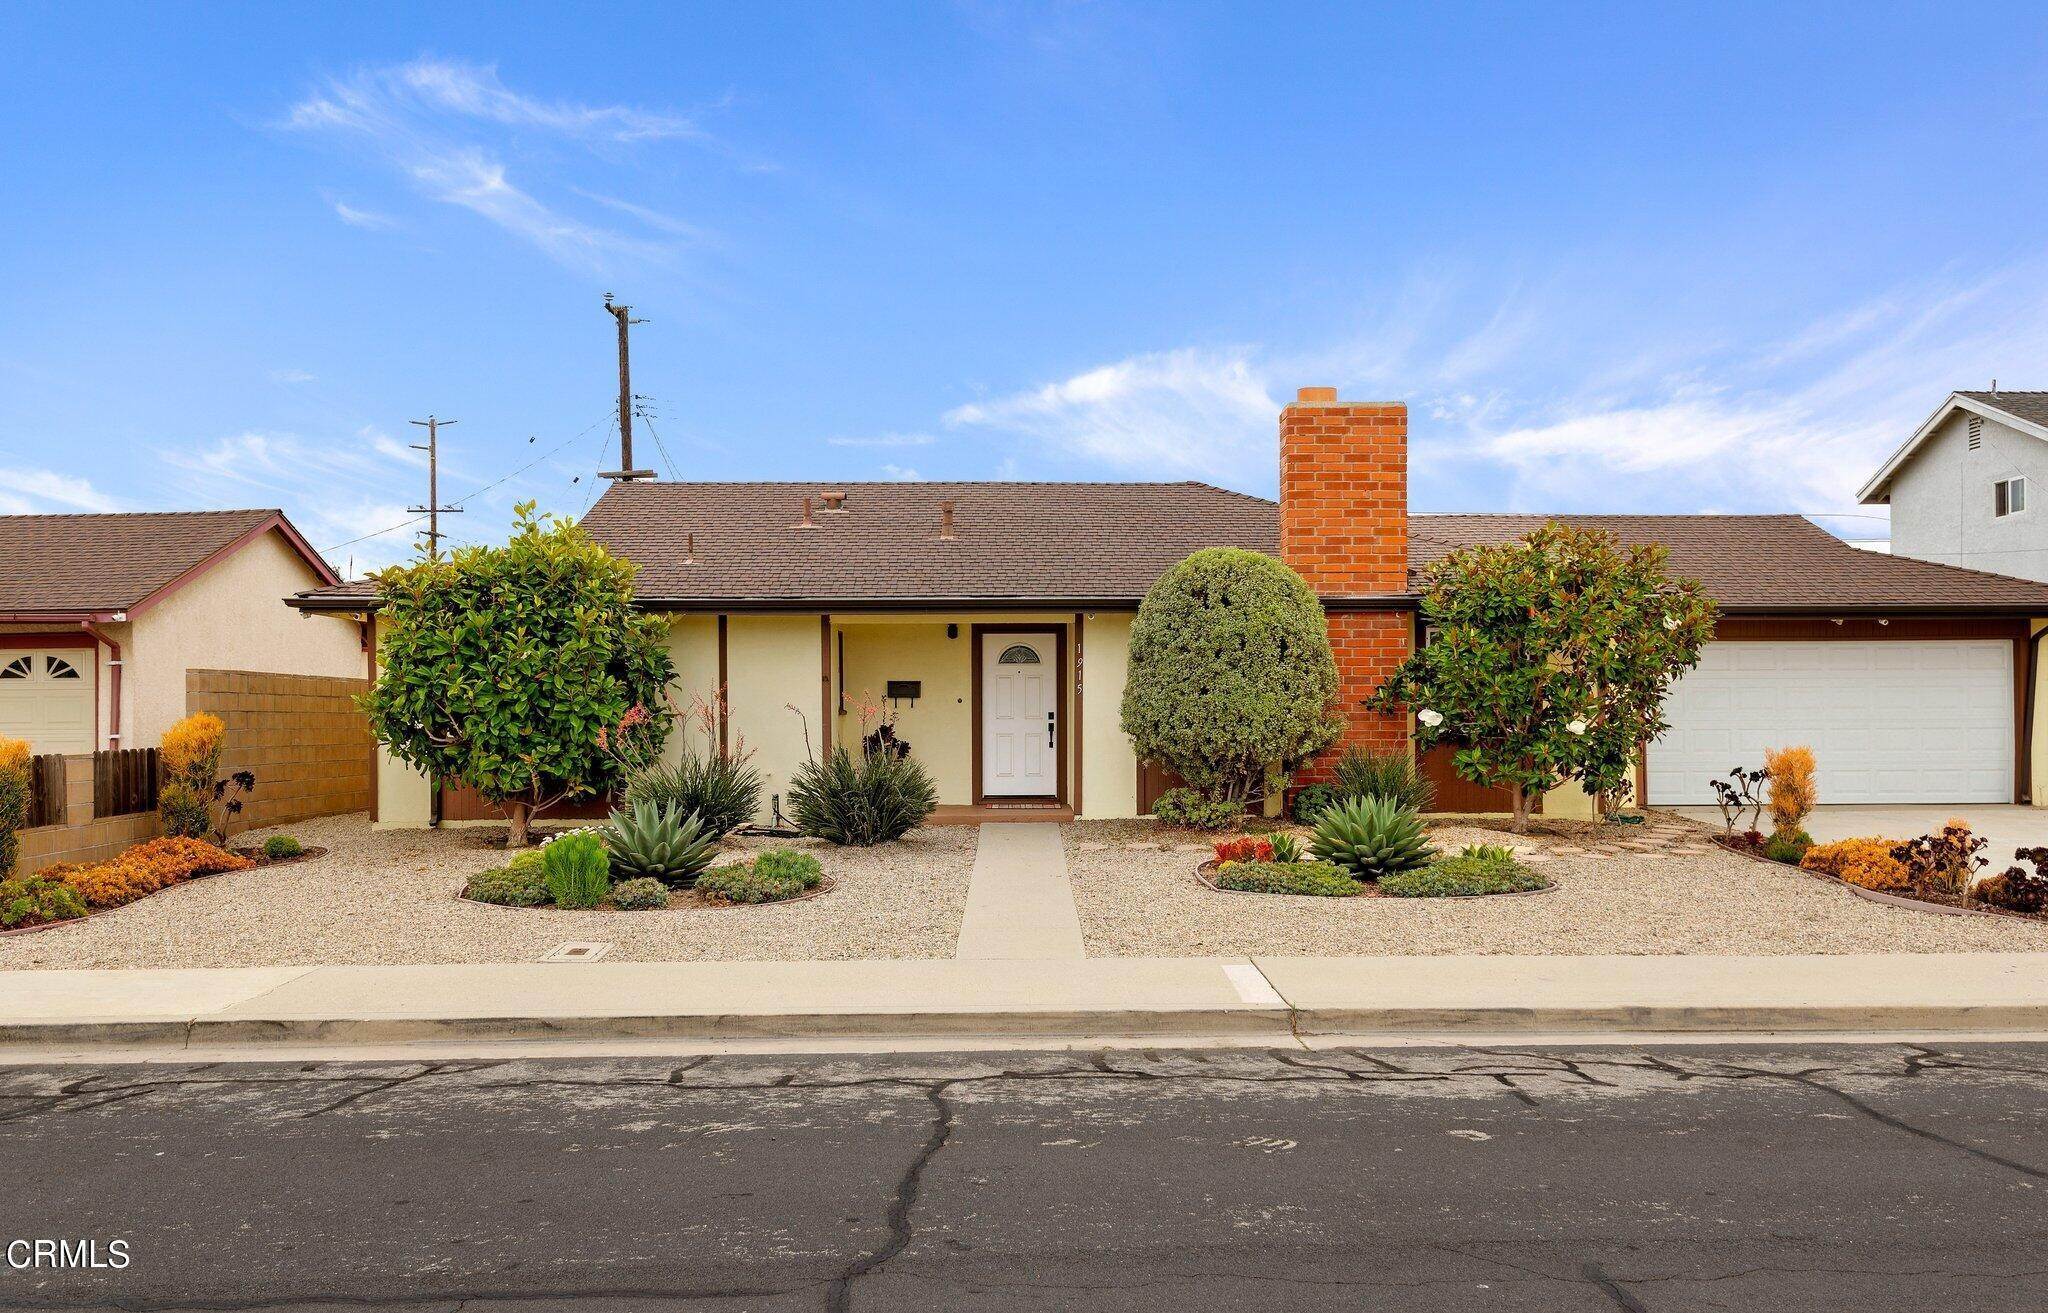 1. Single Family Homes for Sale at 1915 Saratoga Street Oxnard, California 93035 United States